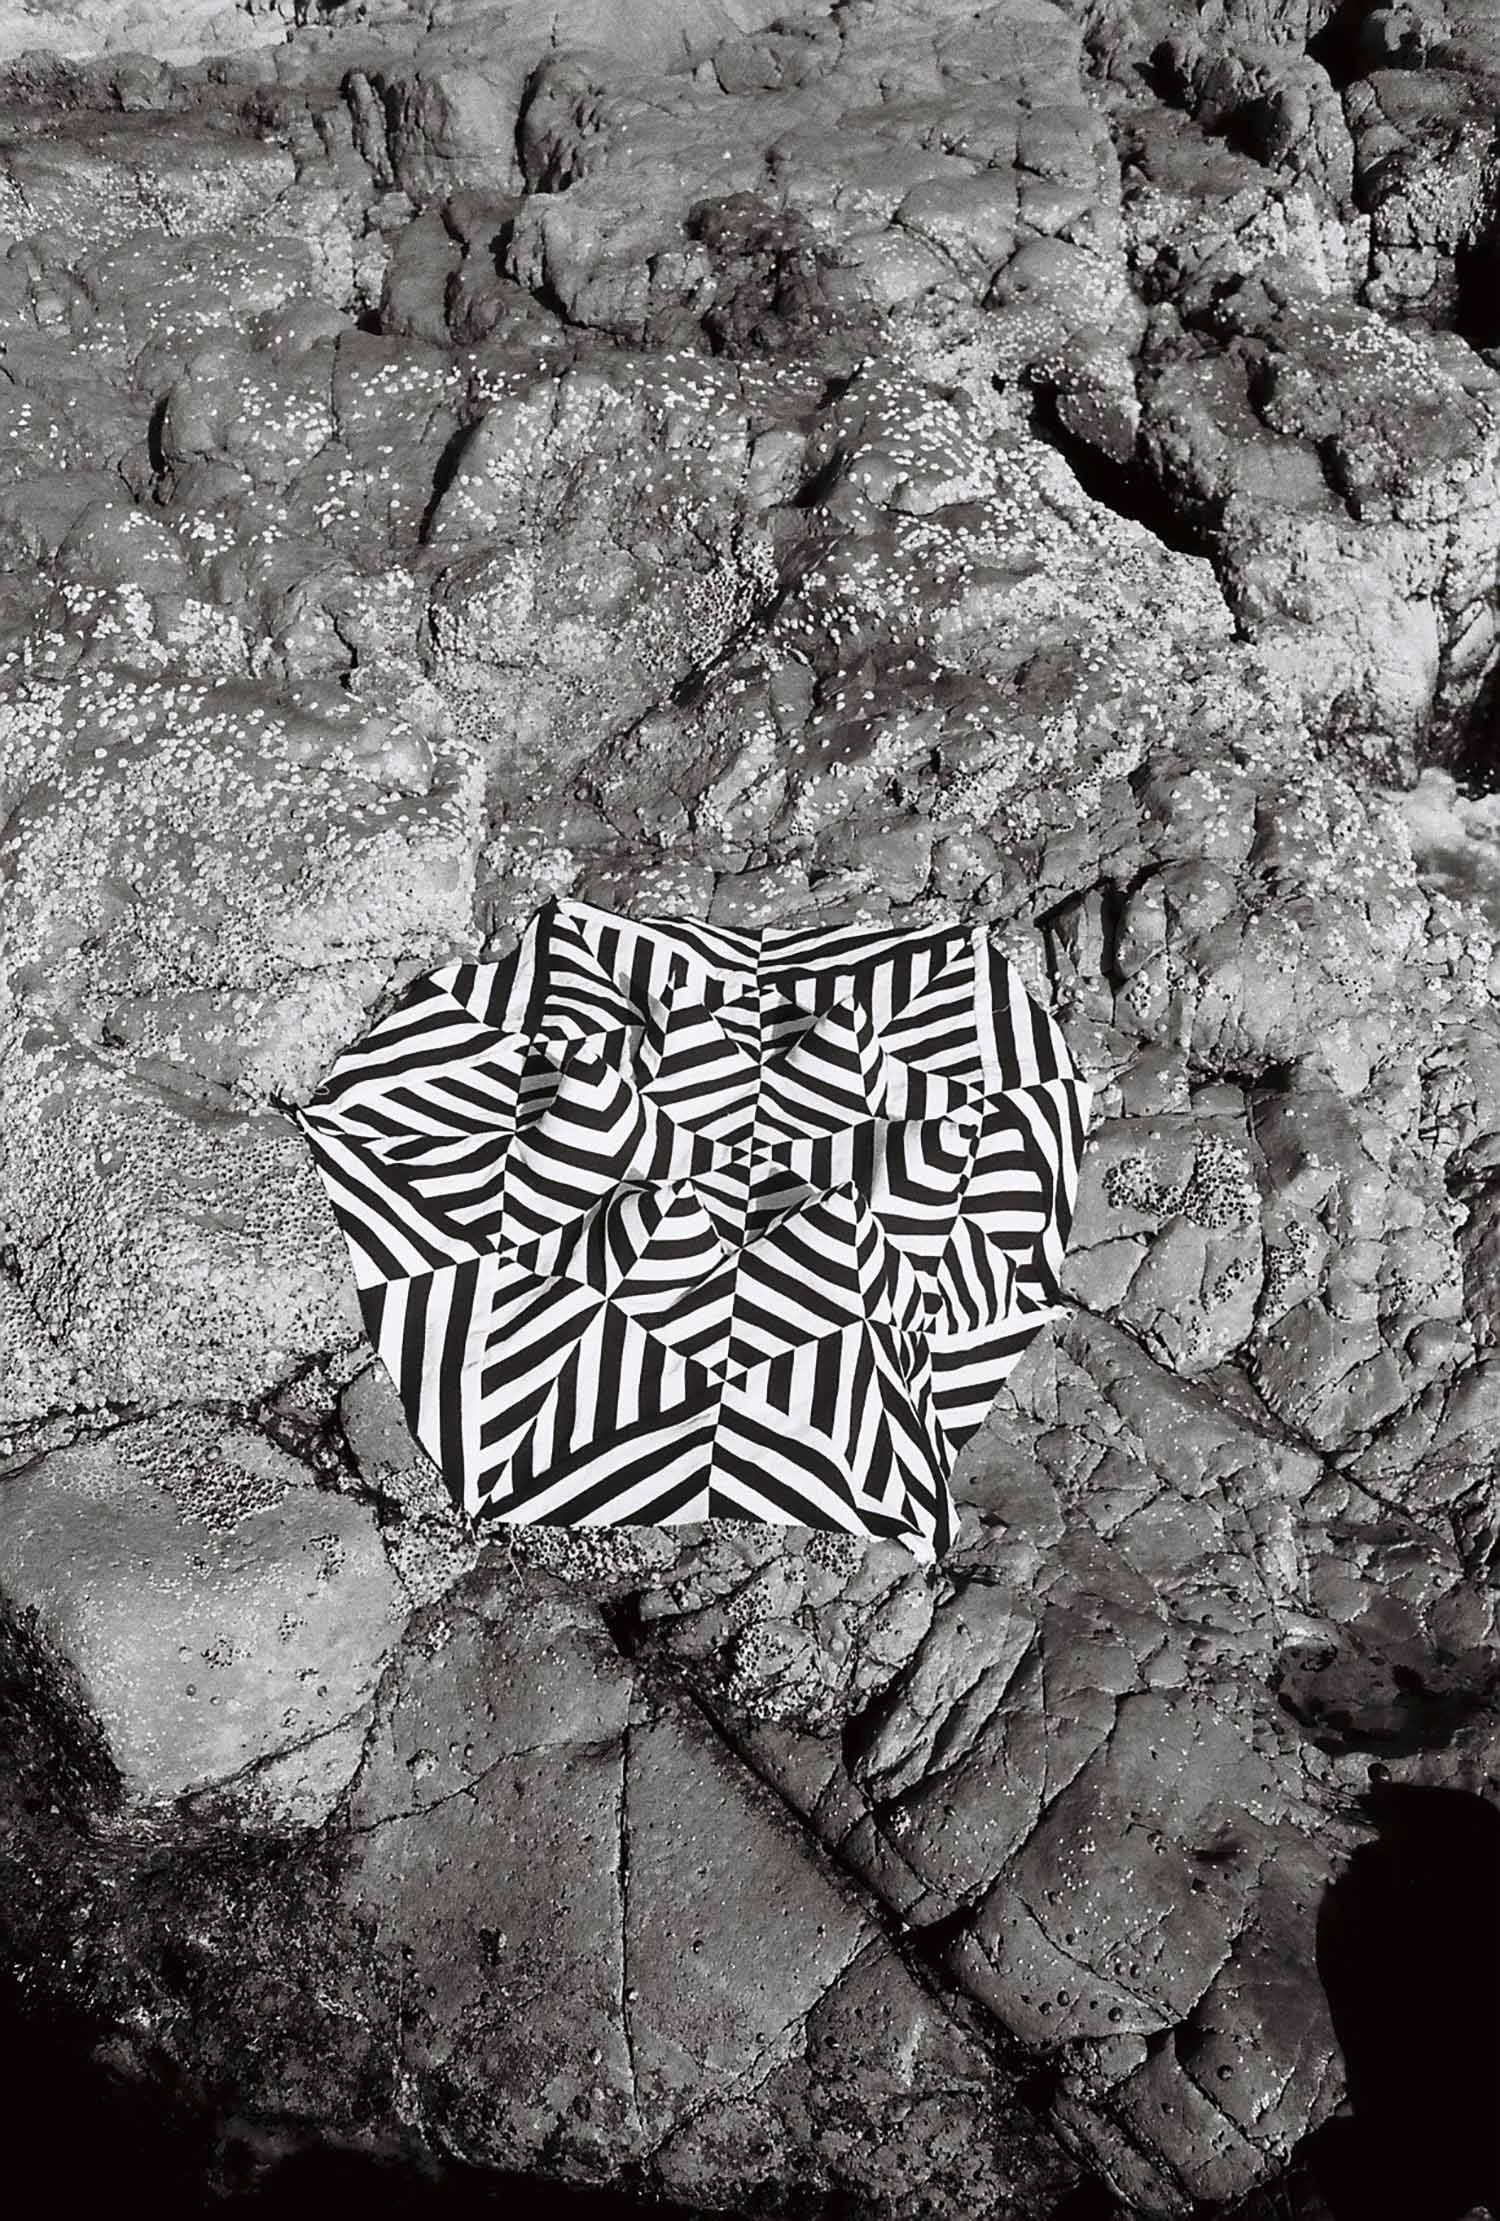   Illusion Quilt at Coolum Beach,&nbsp; 2016, 35mm print (photo Rhett Wyman) 